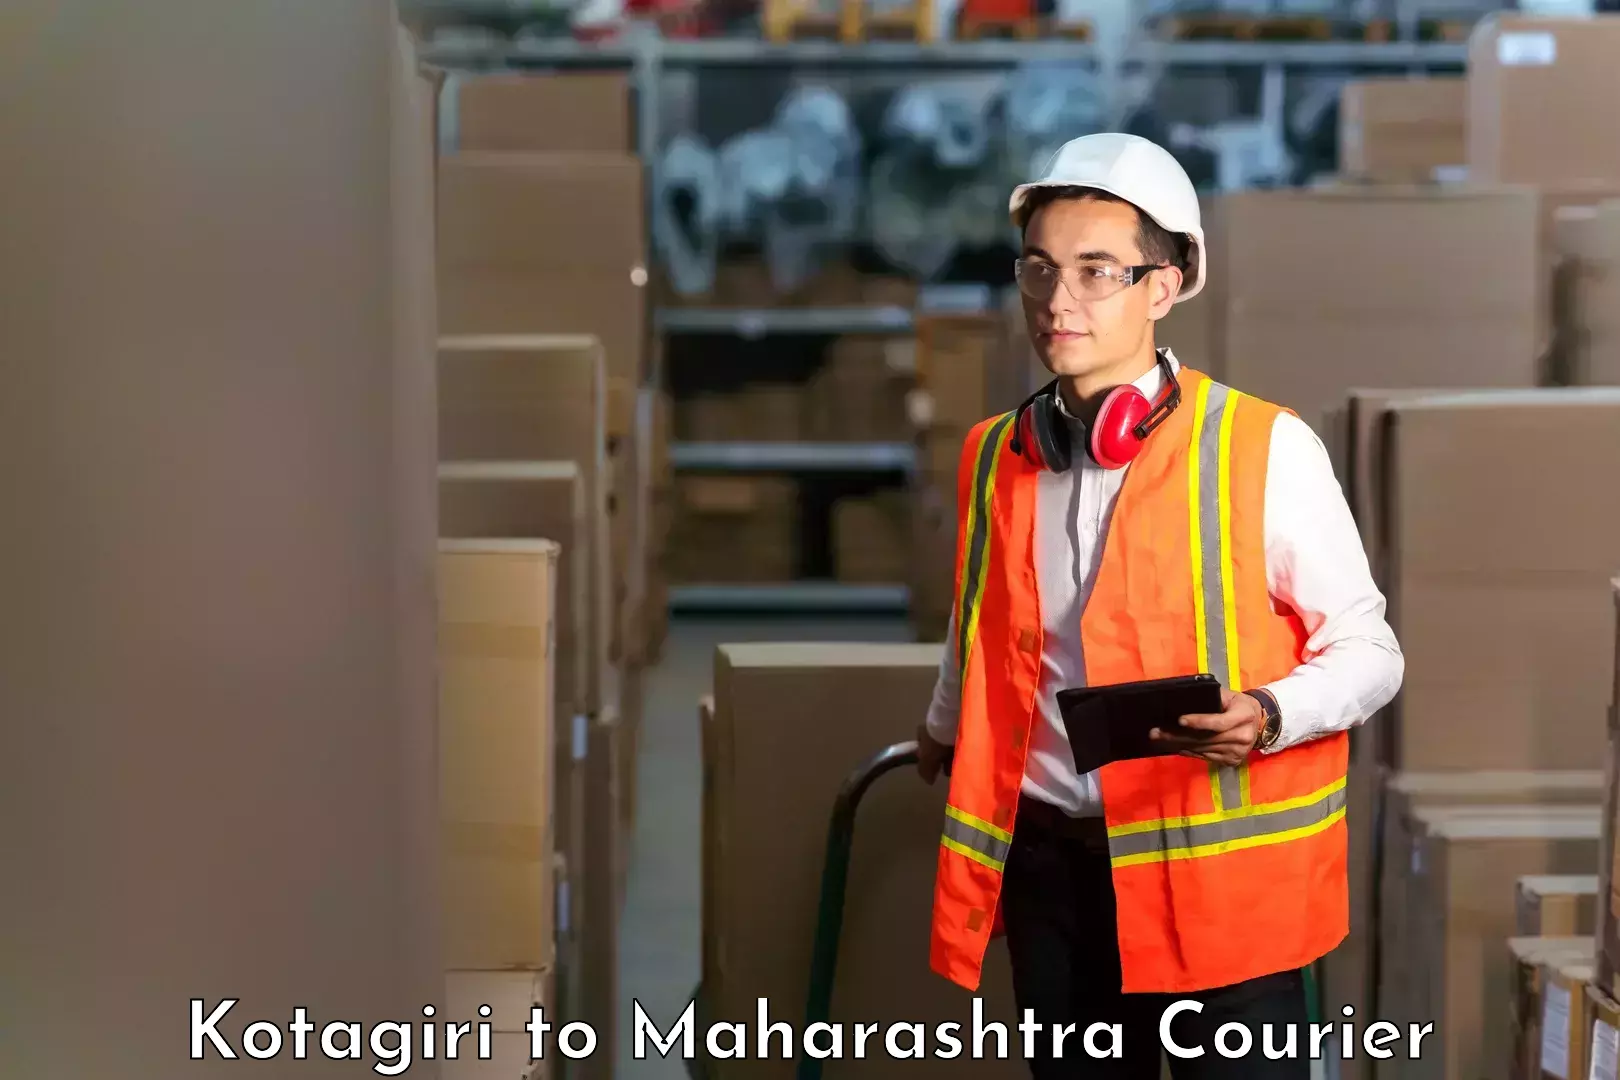 Professional courier handling Kotagiri to Maharashtra